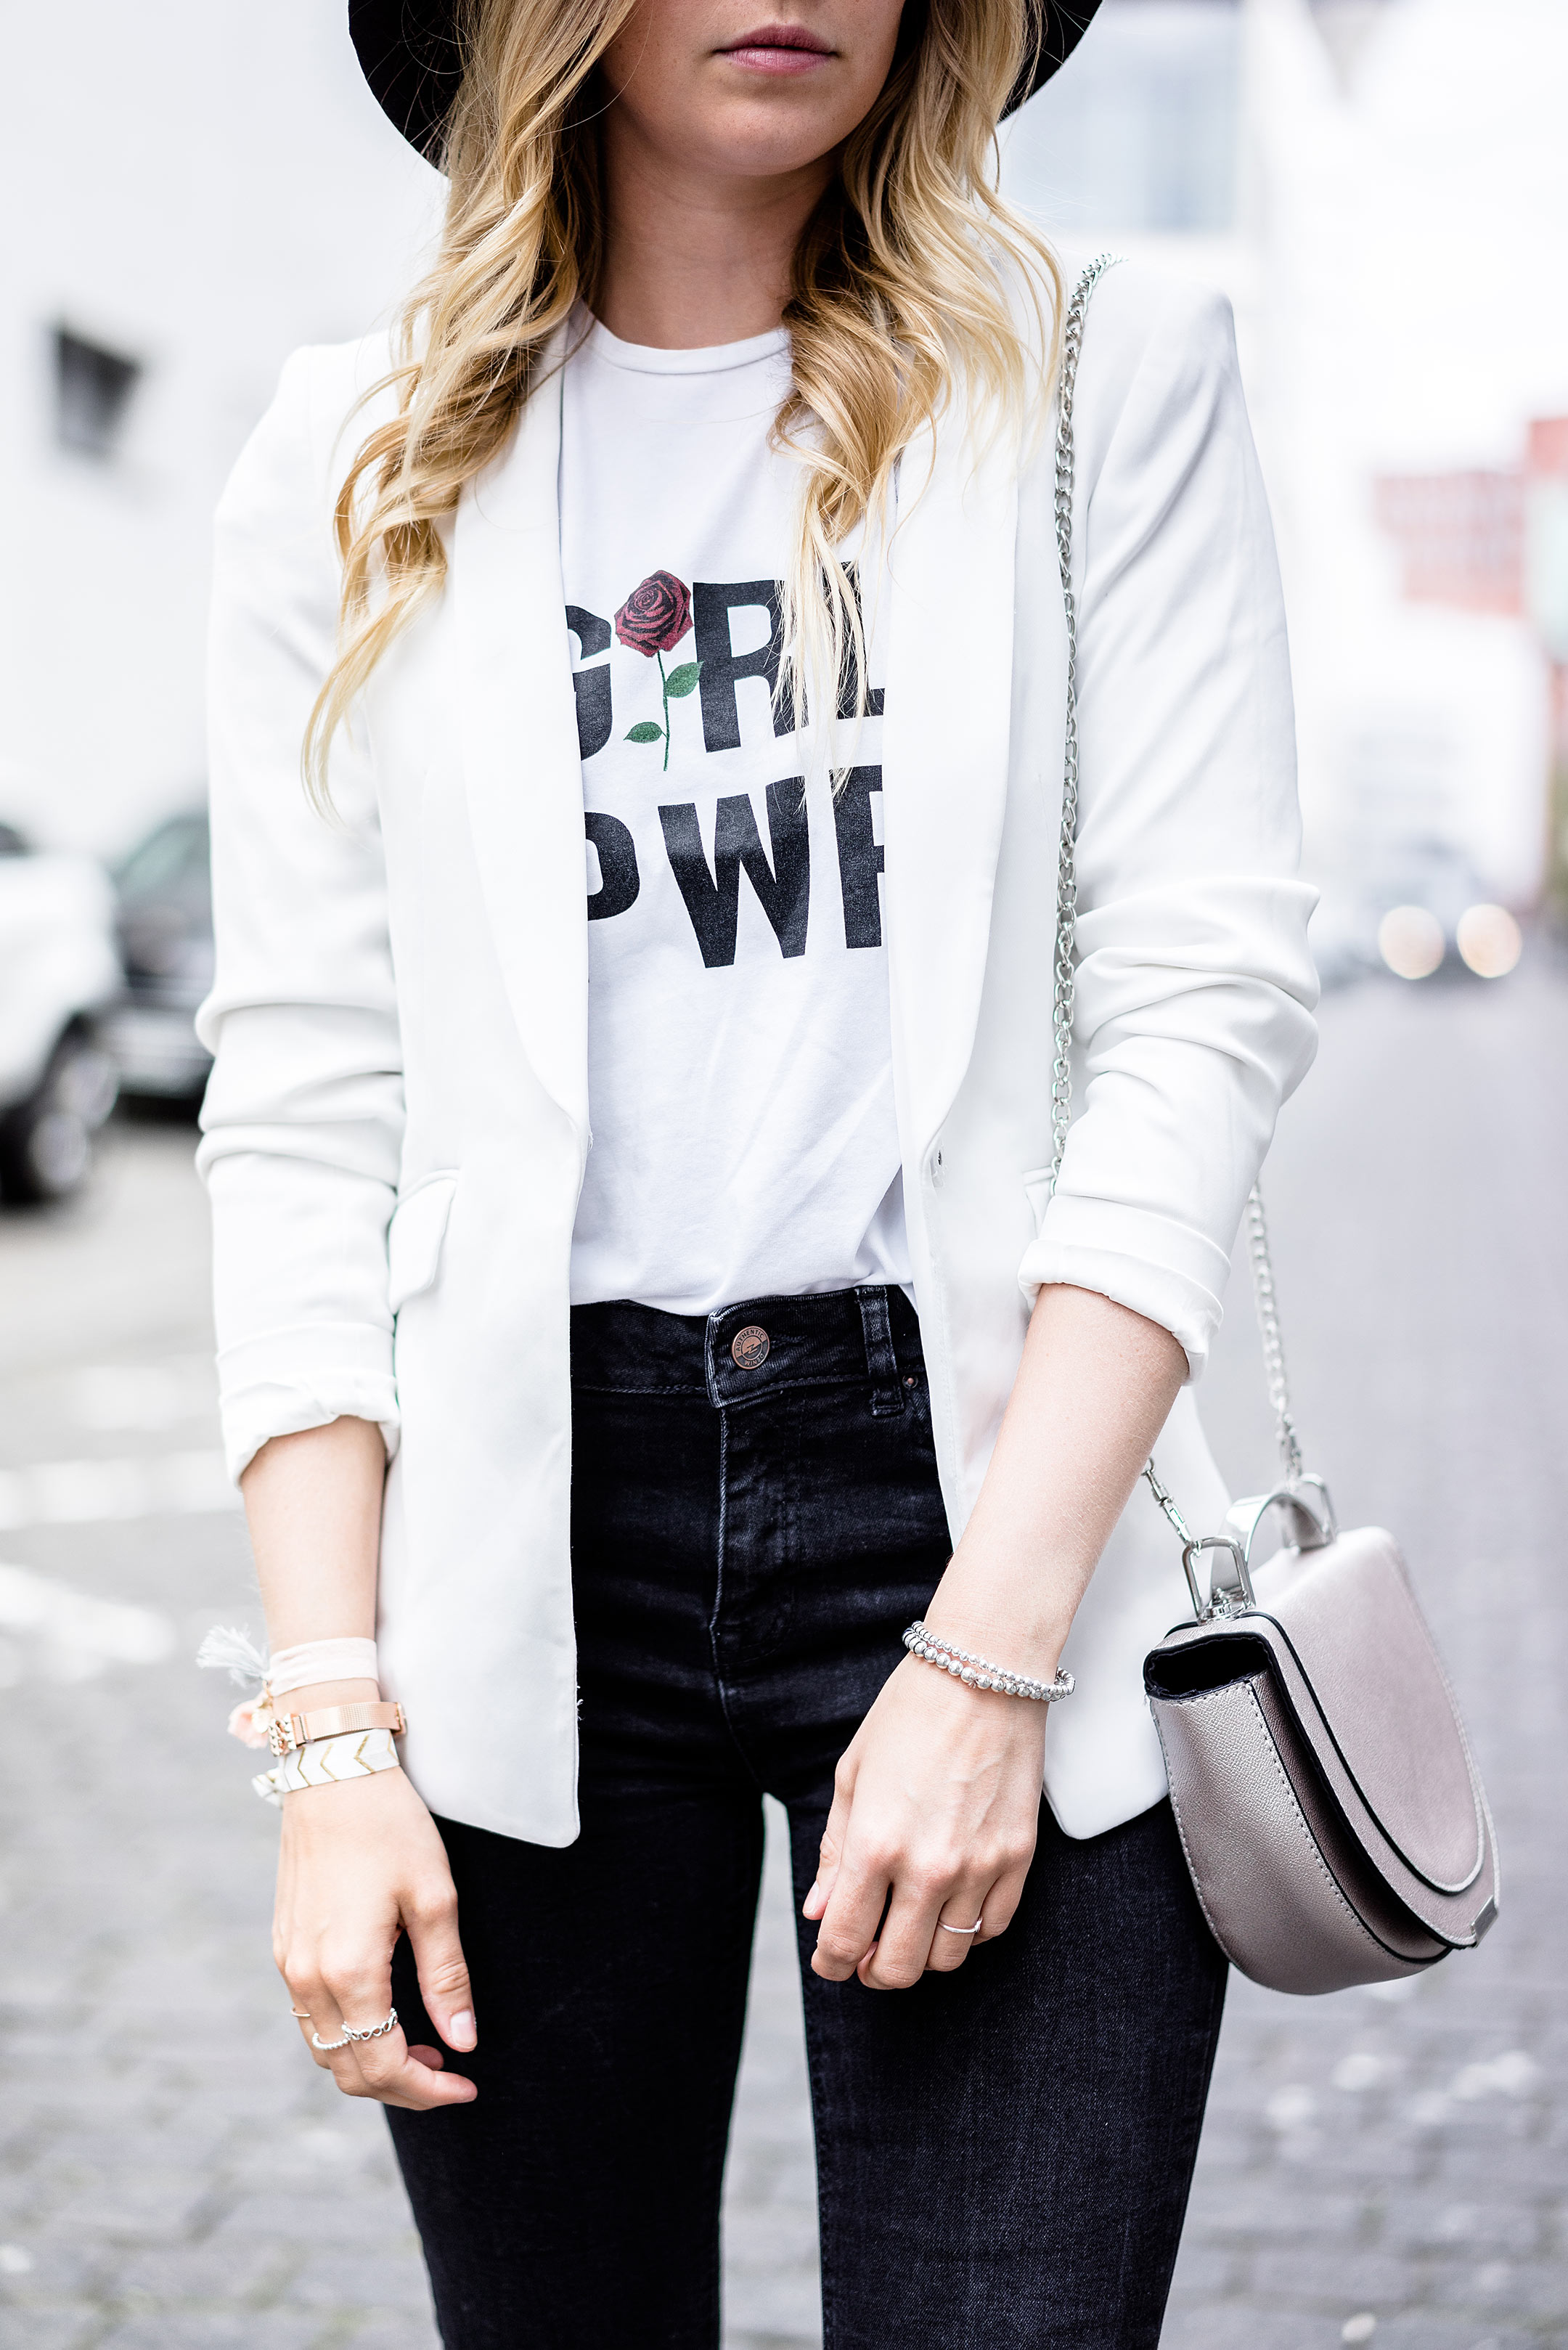 Girl Power Shirt Fashion Blog Düsseldorf Sunnyinga